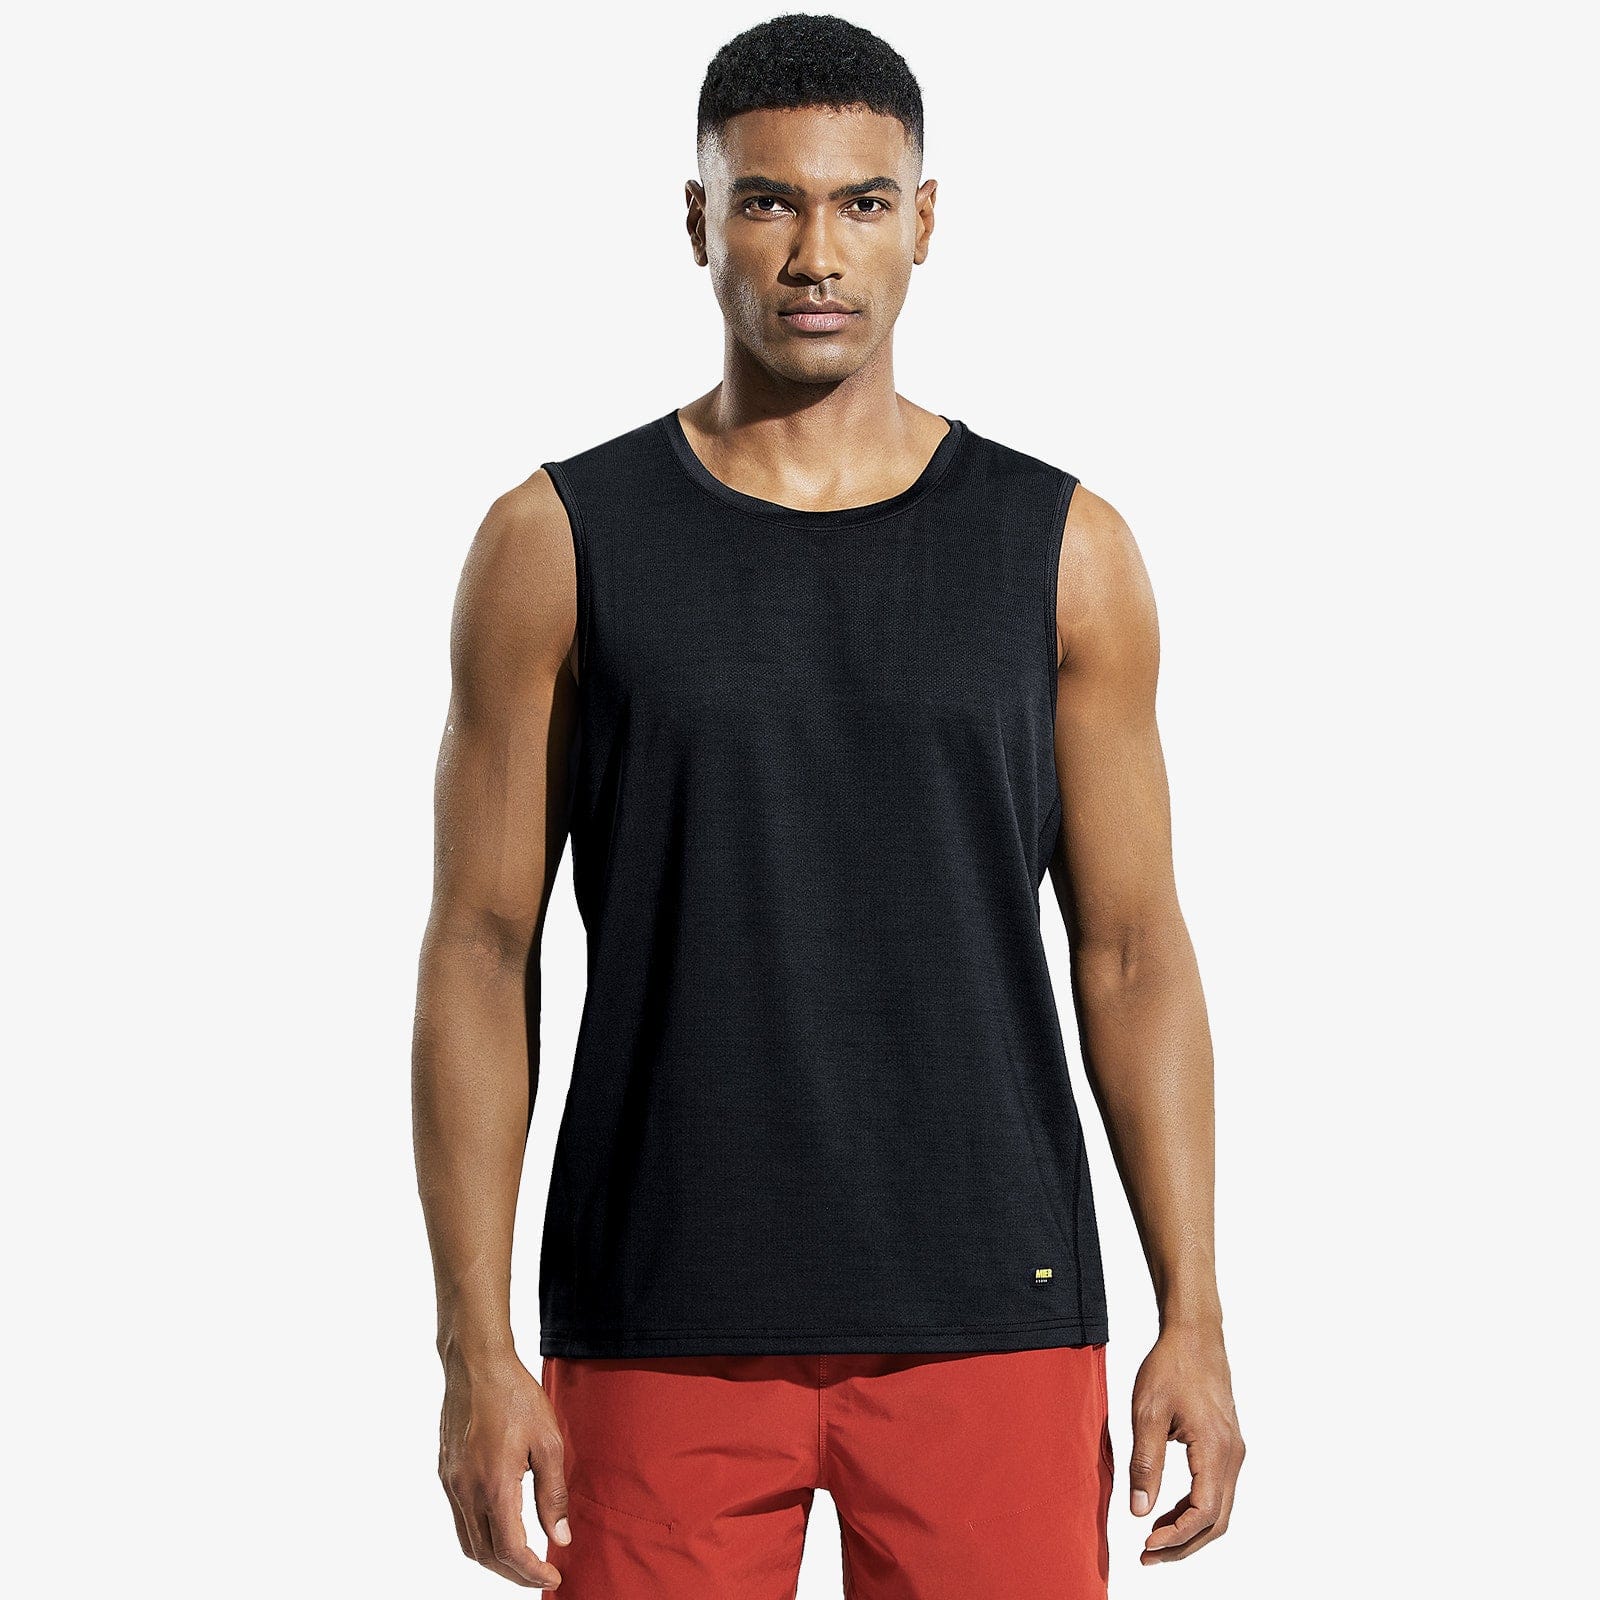 Men’s Sleeveless Tank Top Dry Fit Workout Tee Shirt Men Shirts Black / S MIER